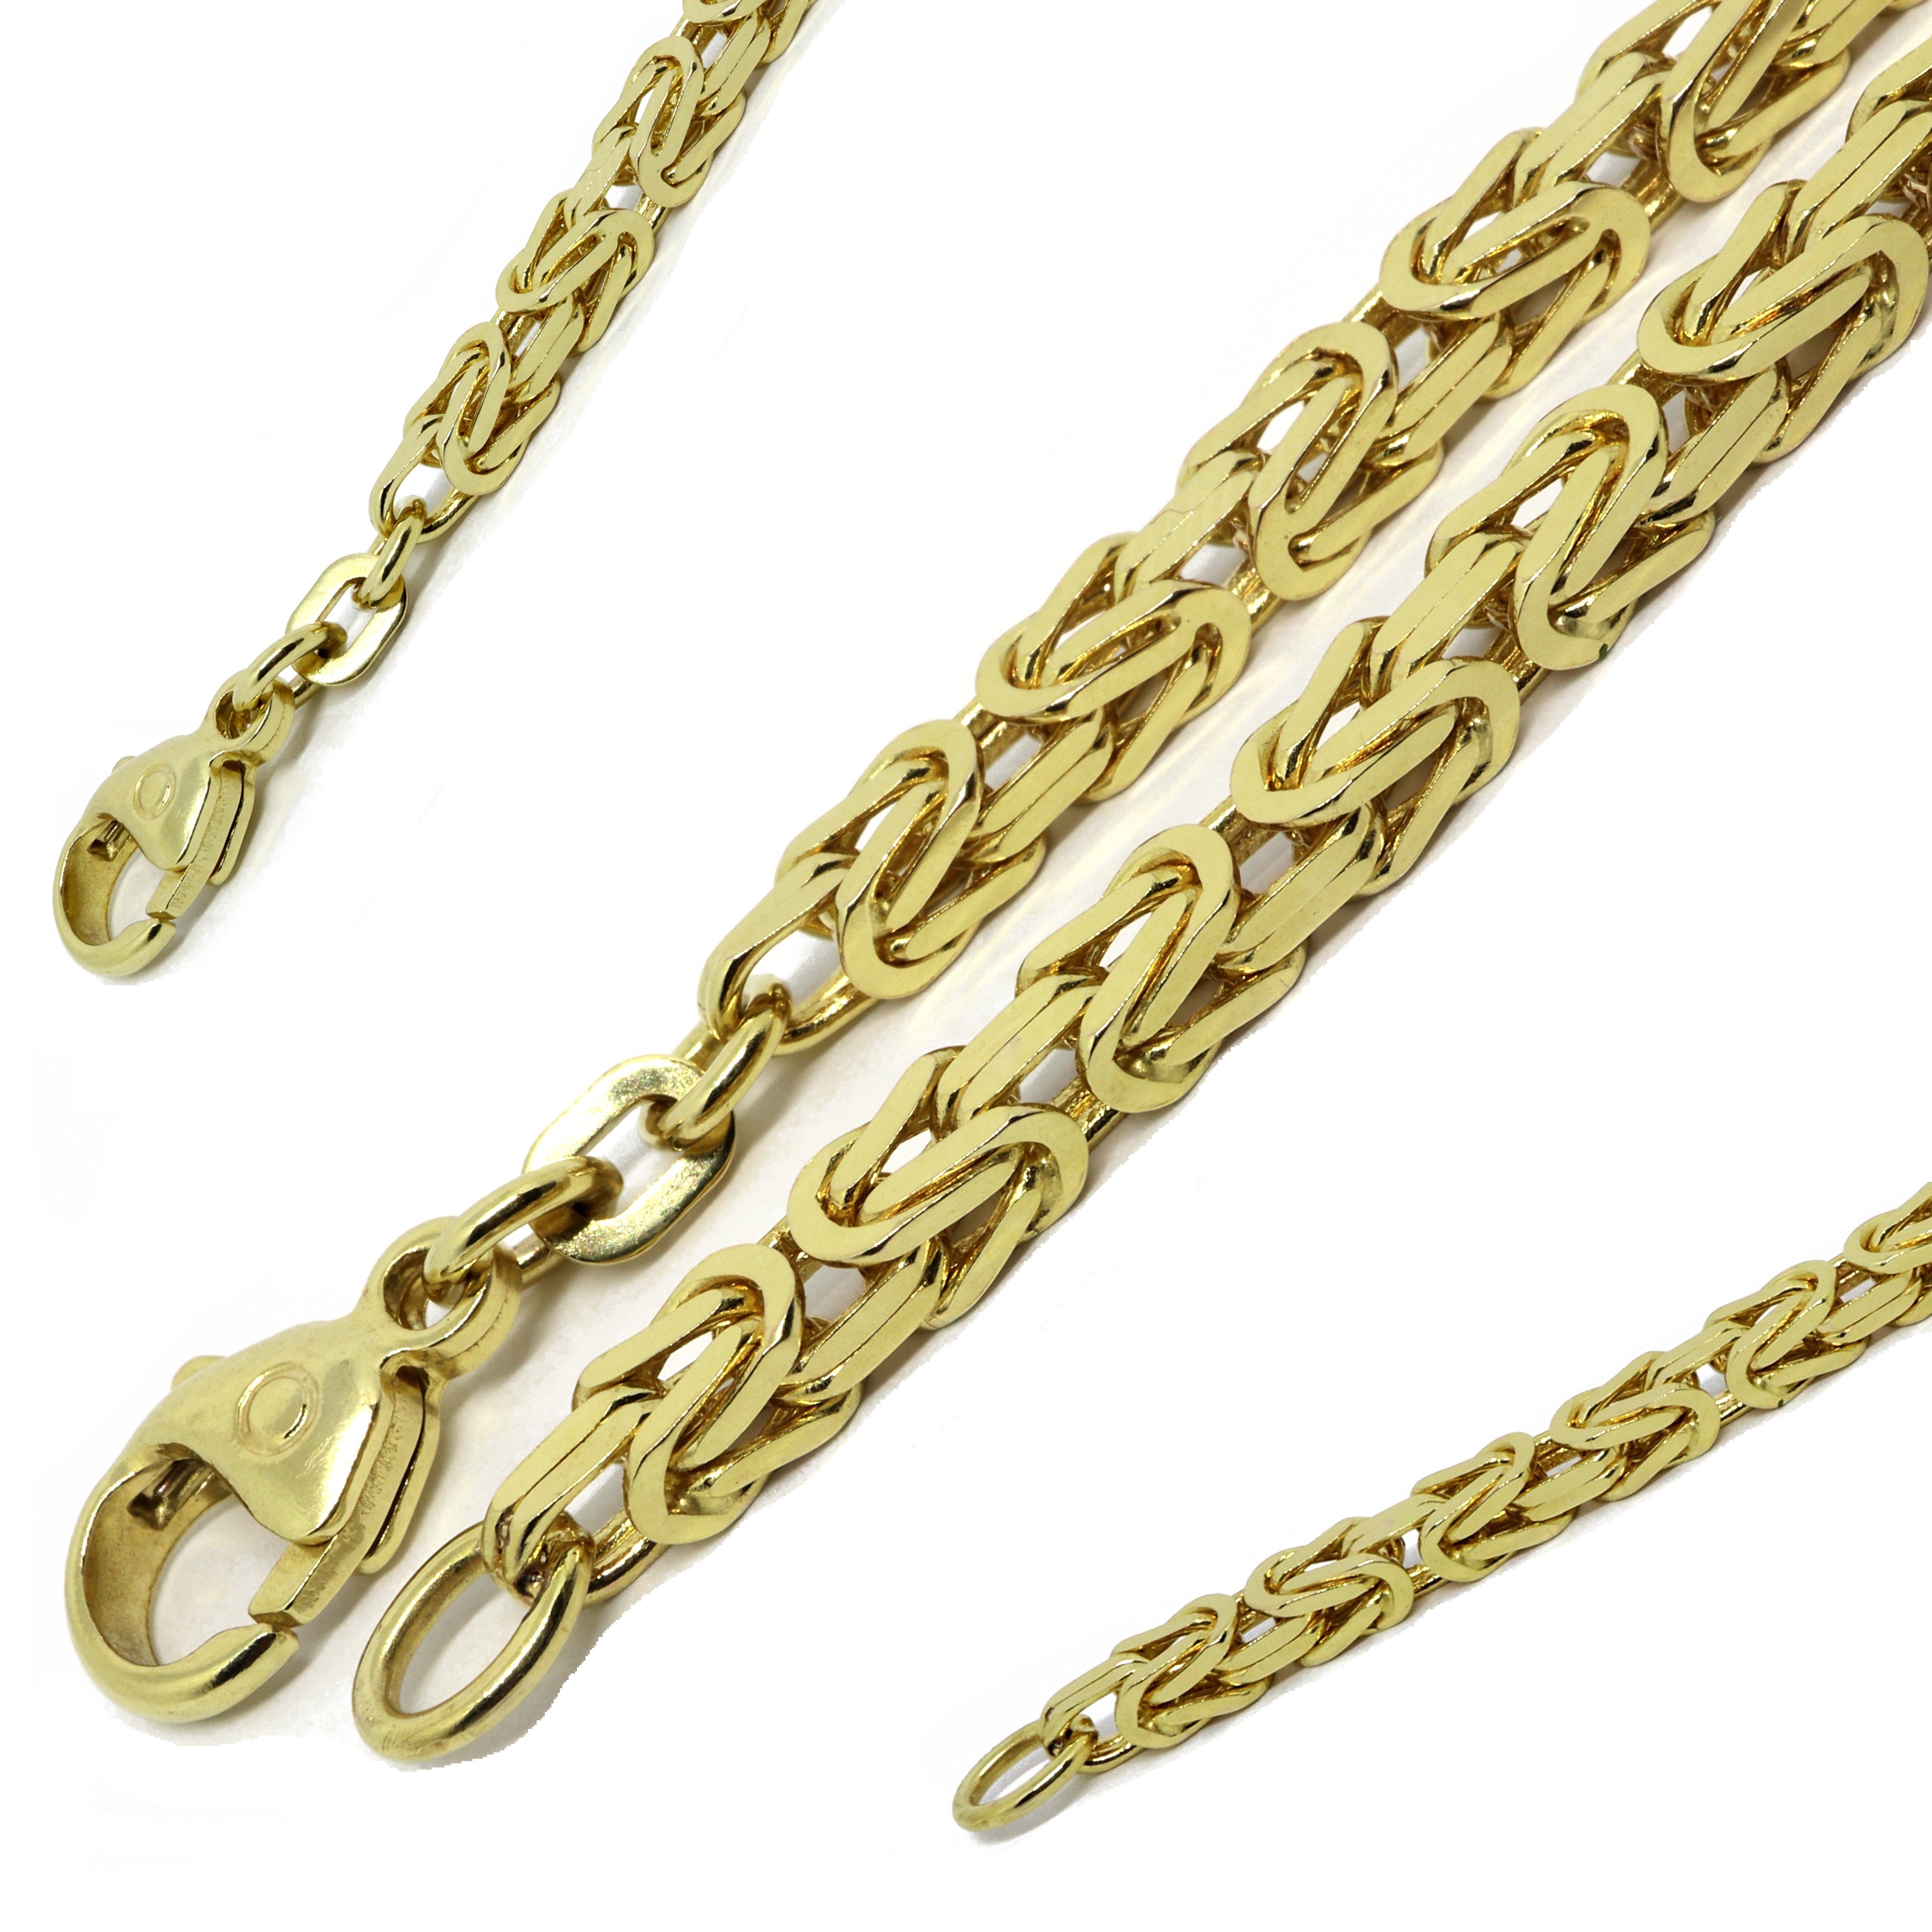 G & J Collier Königskette 585/14K Gold 2,8mm 55cm edle hochwertige Halskette, Made in Germany | Ketten ohne Anhänger